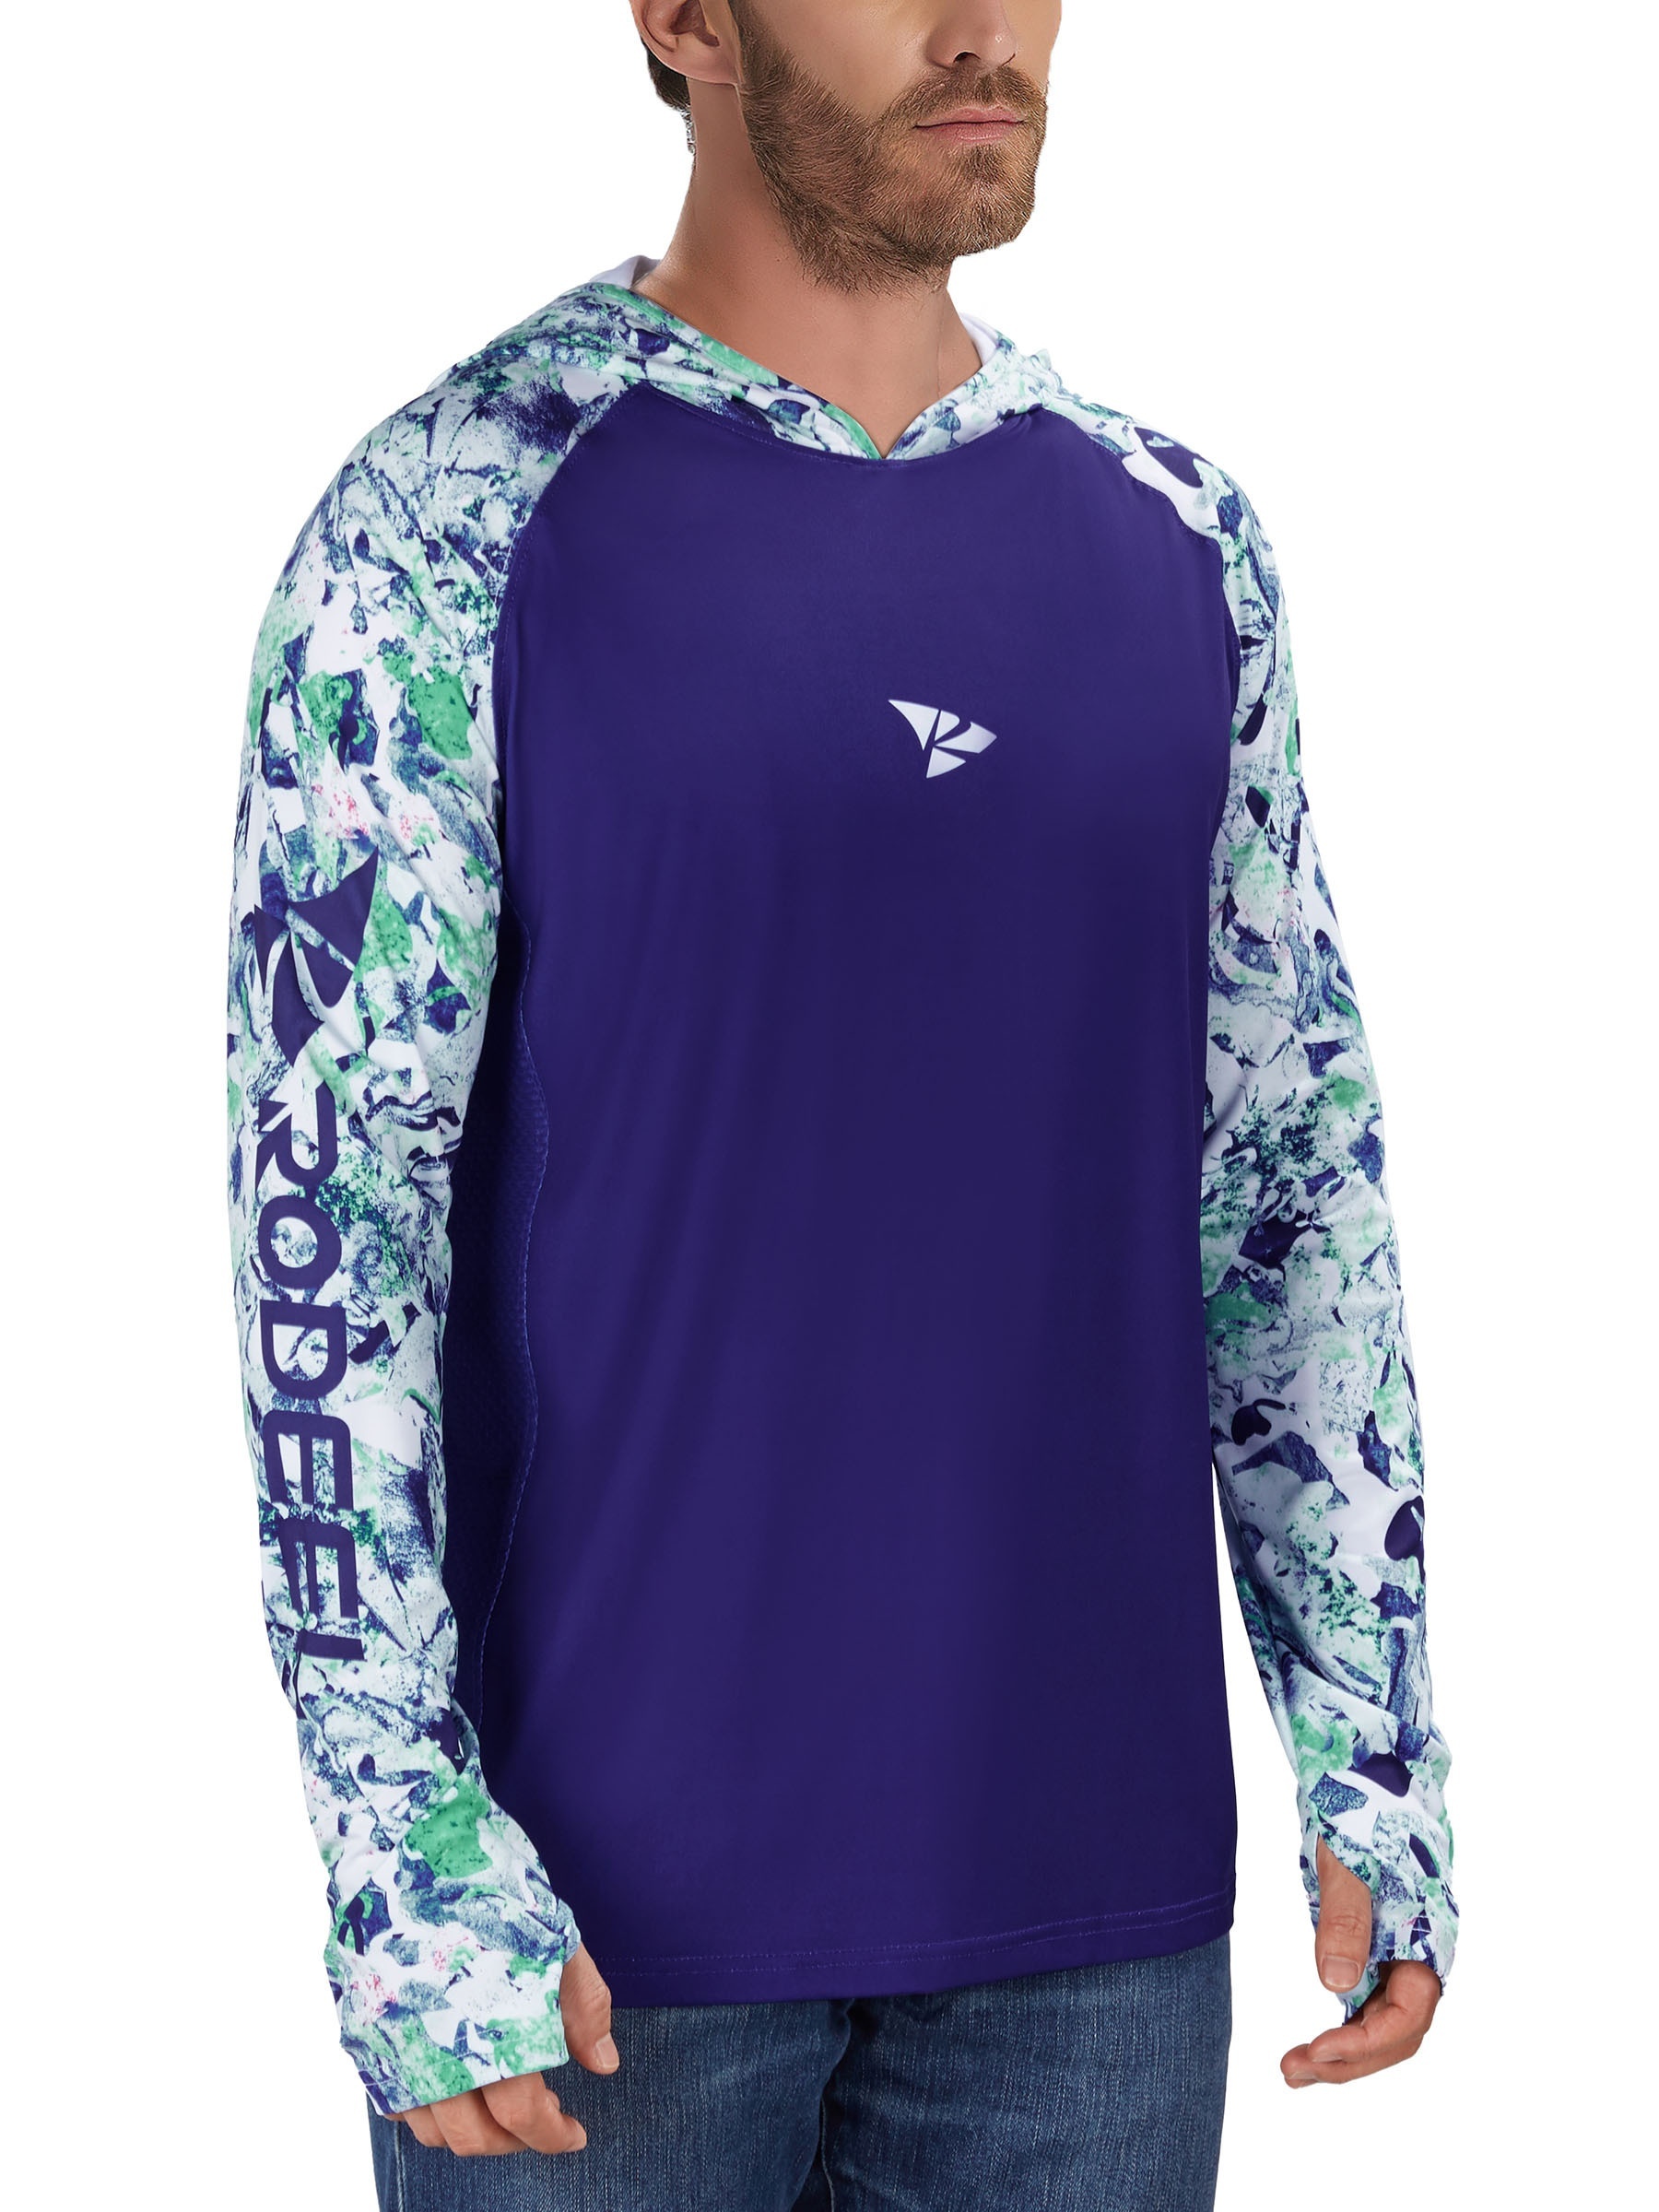 Fashion Men's Print T shirt Long Sleeve Fishing Shirt - Breathable, UV  Protection Outdoor Sports Crewneck Tops 6XL